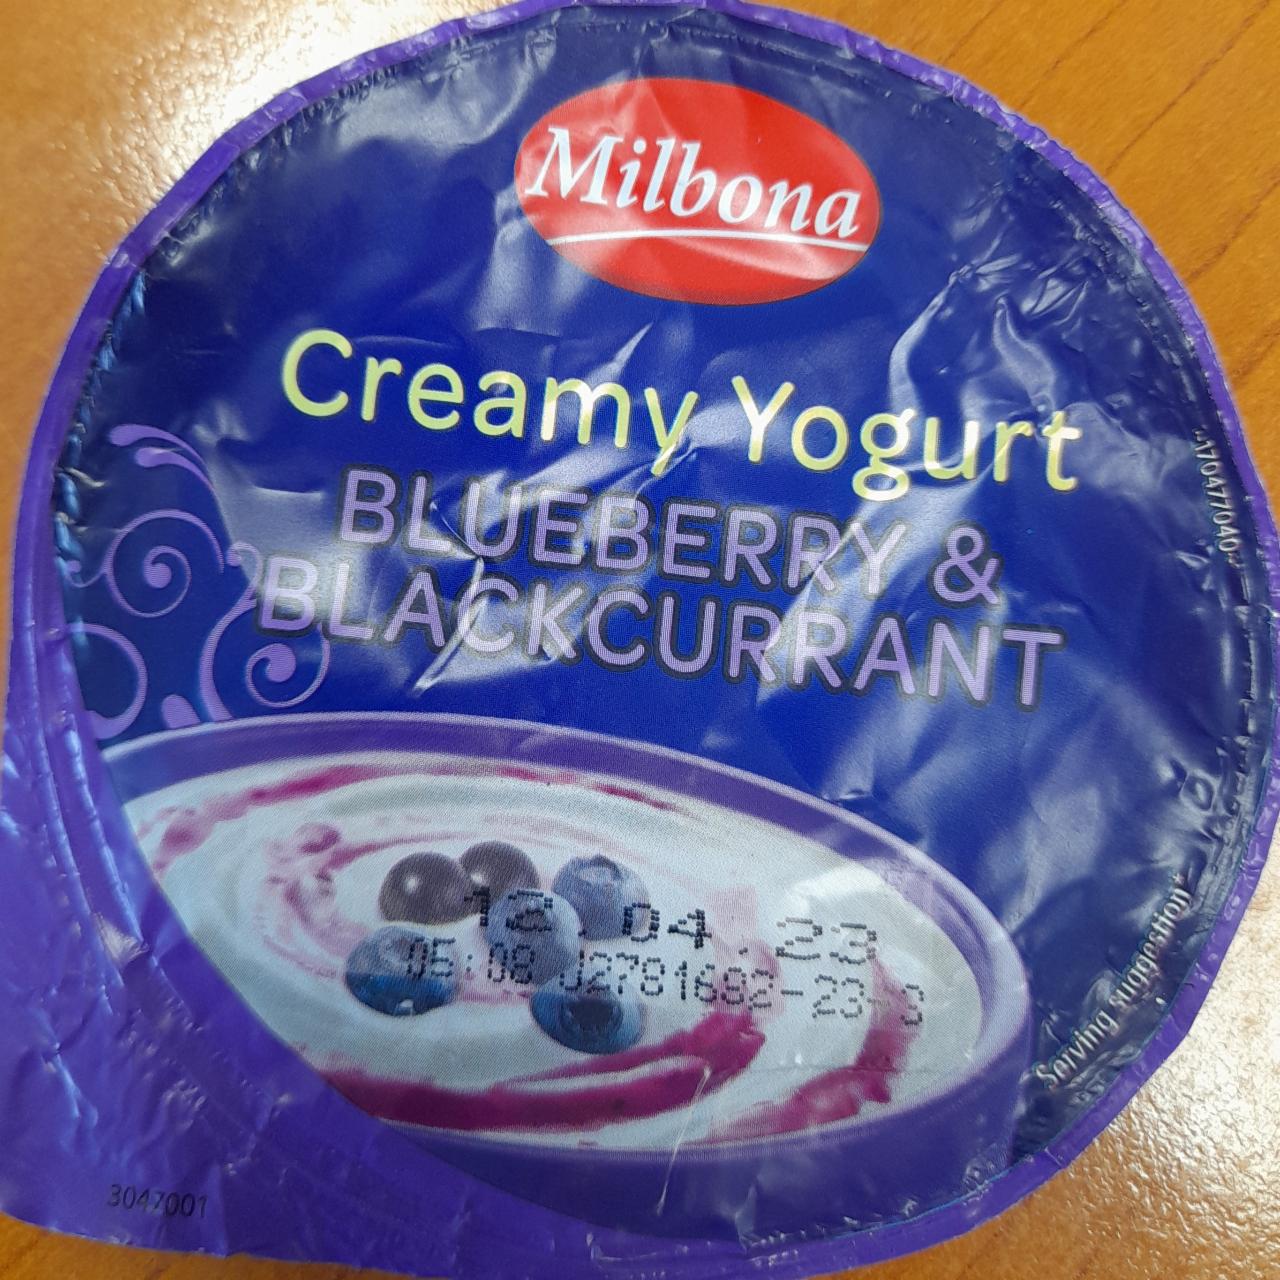 Fotografie - Creamy Yogurt Blueberry & Blackcurrant Milbona